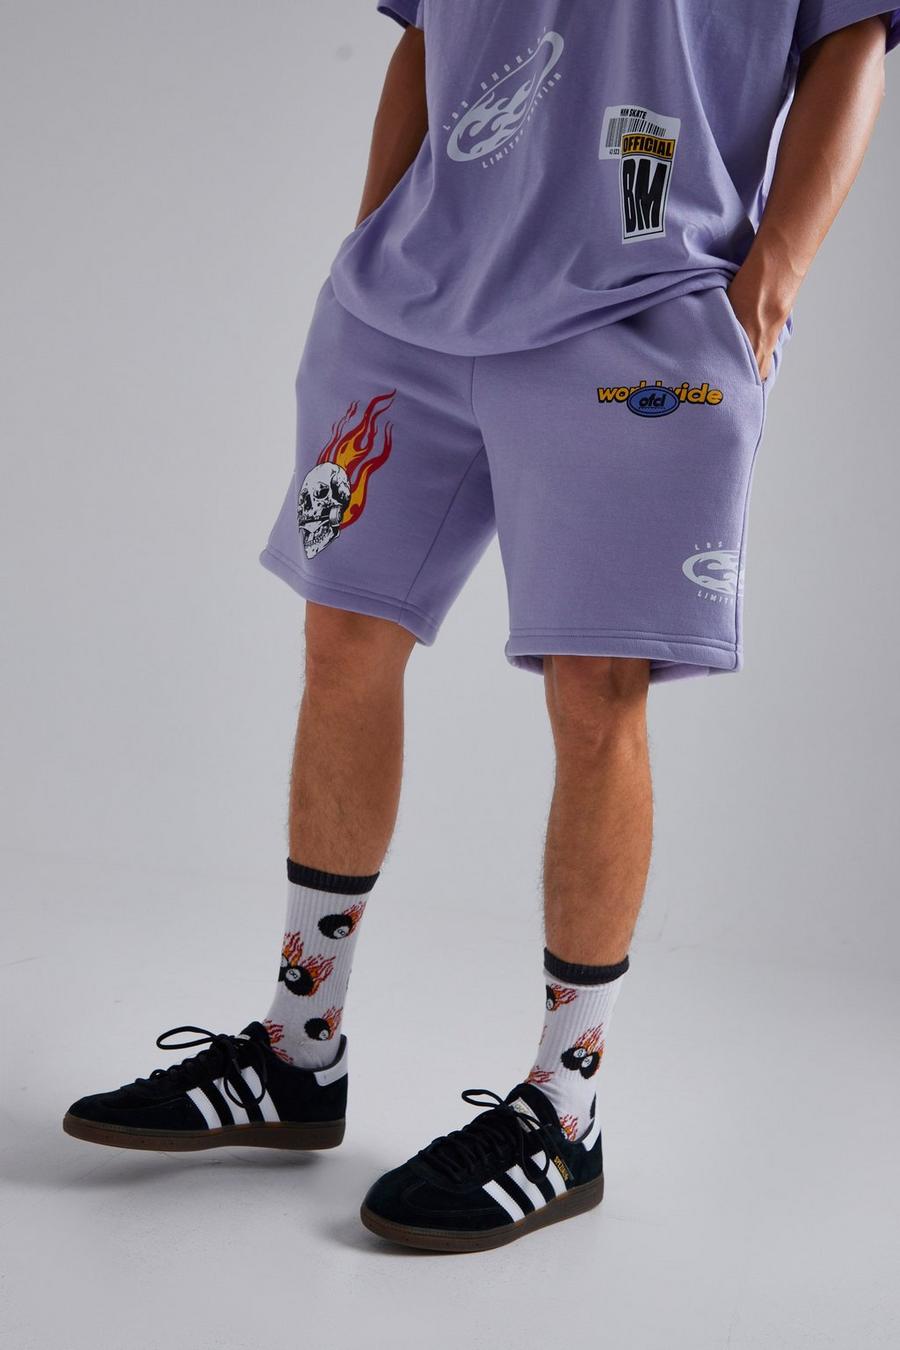 Lockere Shorts mit Applique, Lilac purple